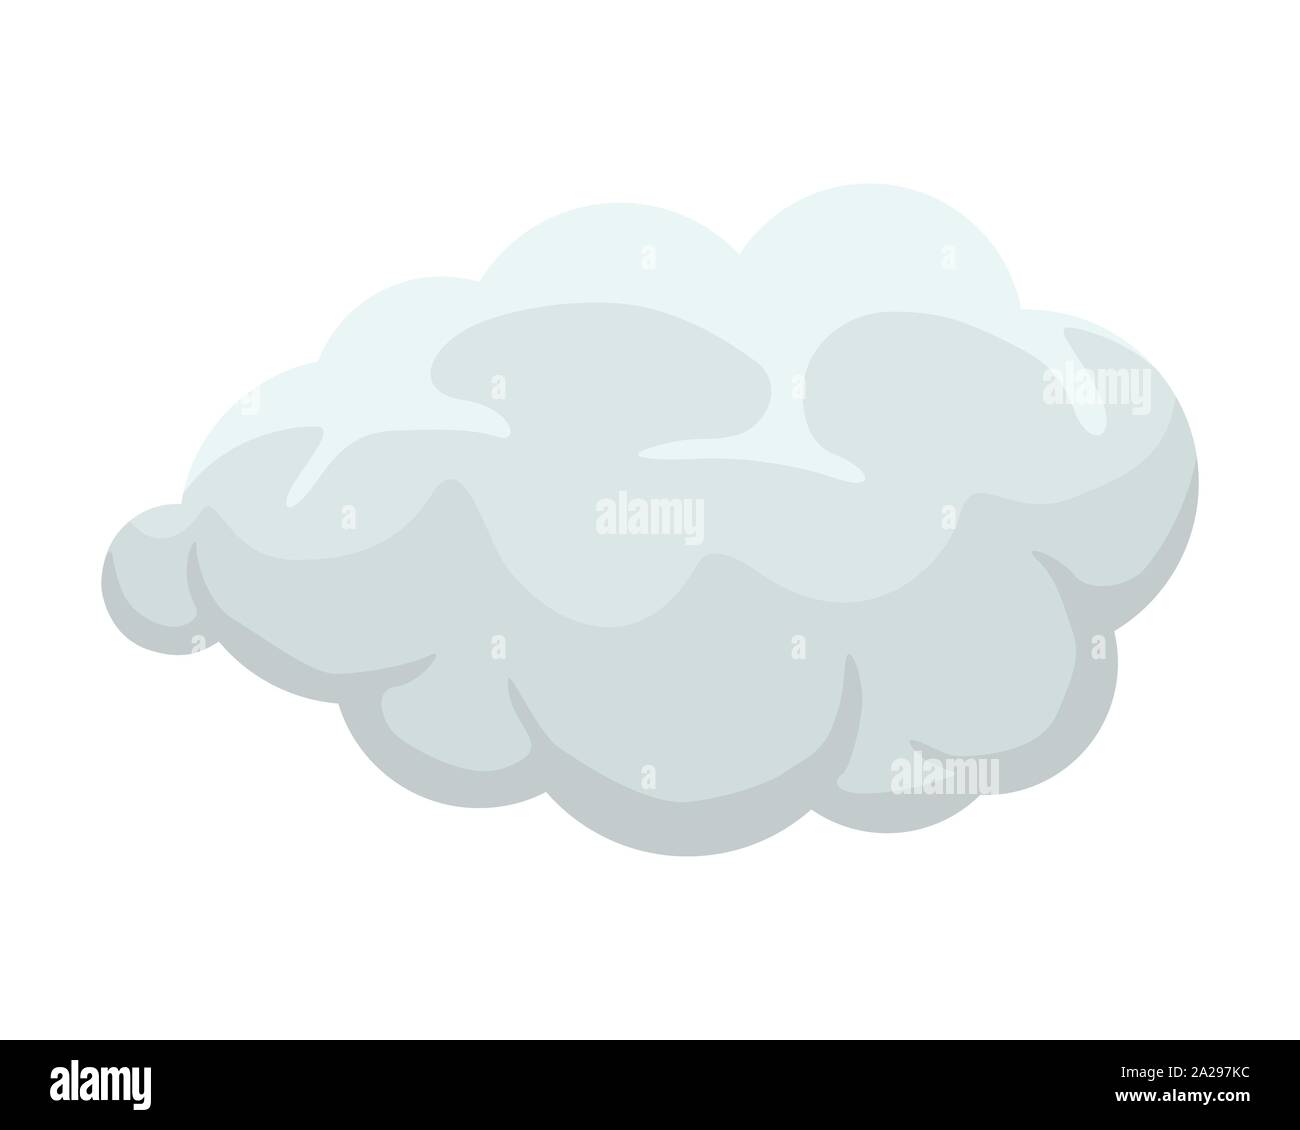 Cartoon smoke or fog. Cumulus explosion comic cloud. Flat smoky shape vector illustration Stock Vector